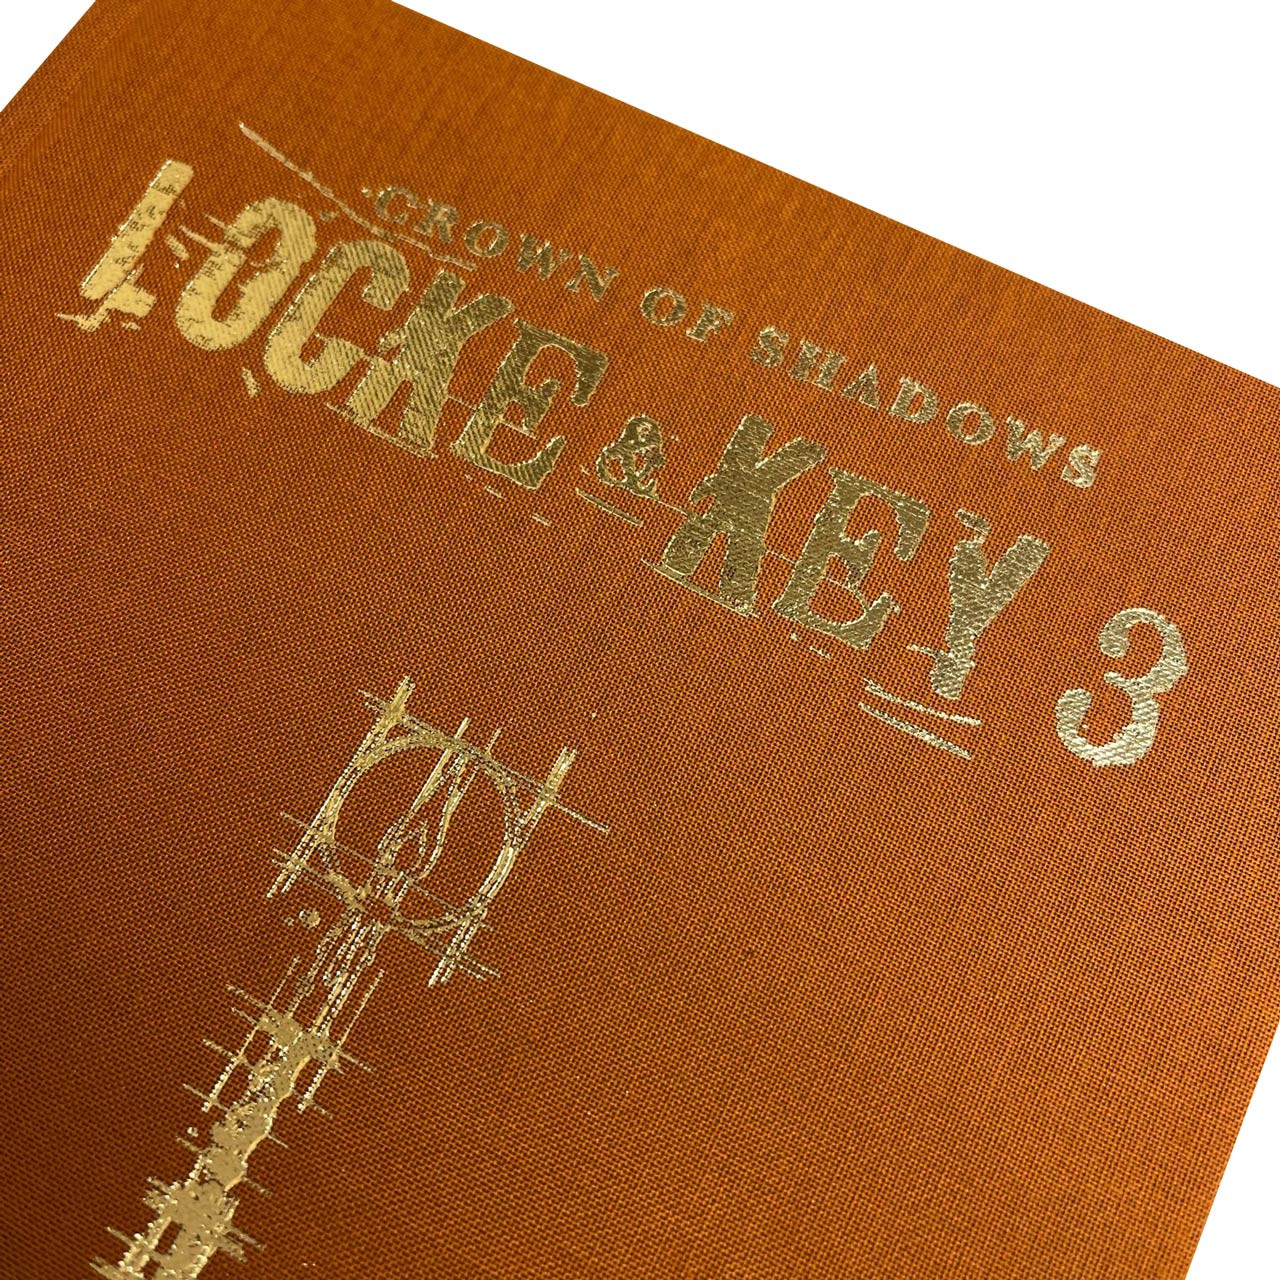 Joe Hill "Locke & Key" Slipcased Signed Limited Edition 4-Volume Collector's Set [Very Fine]